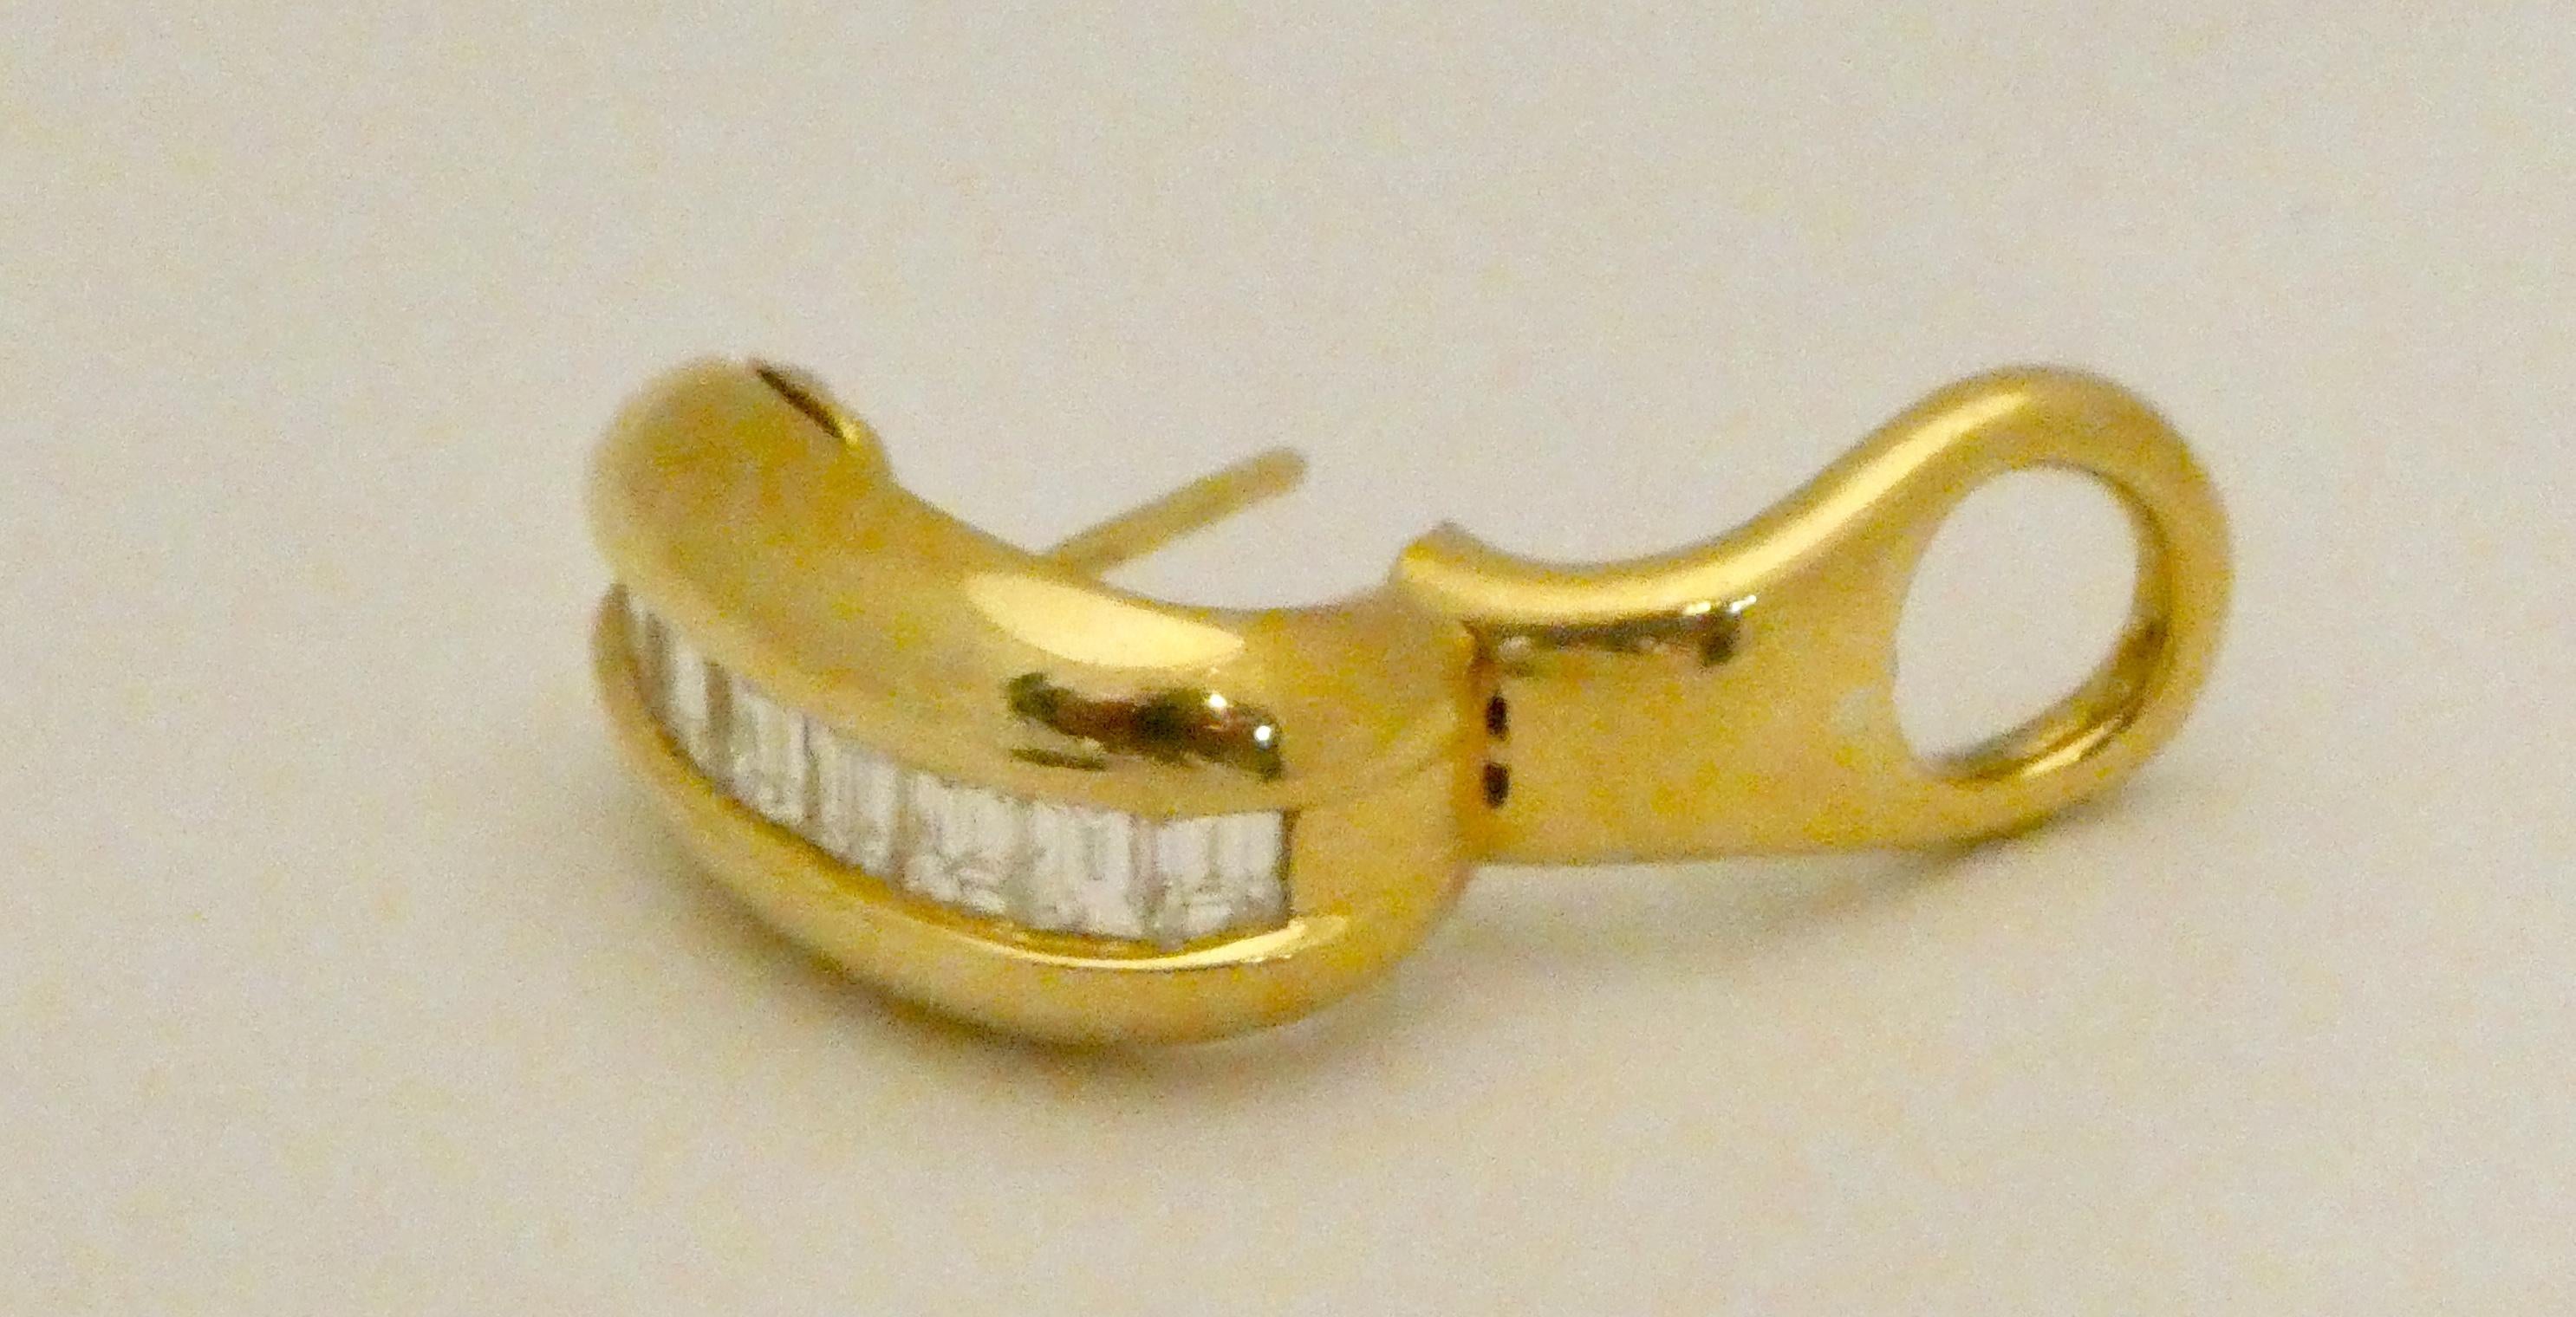 18 Karat Yellow Gold Cartier Diamond Earrings, from the 